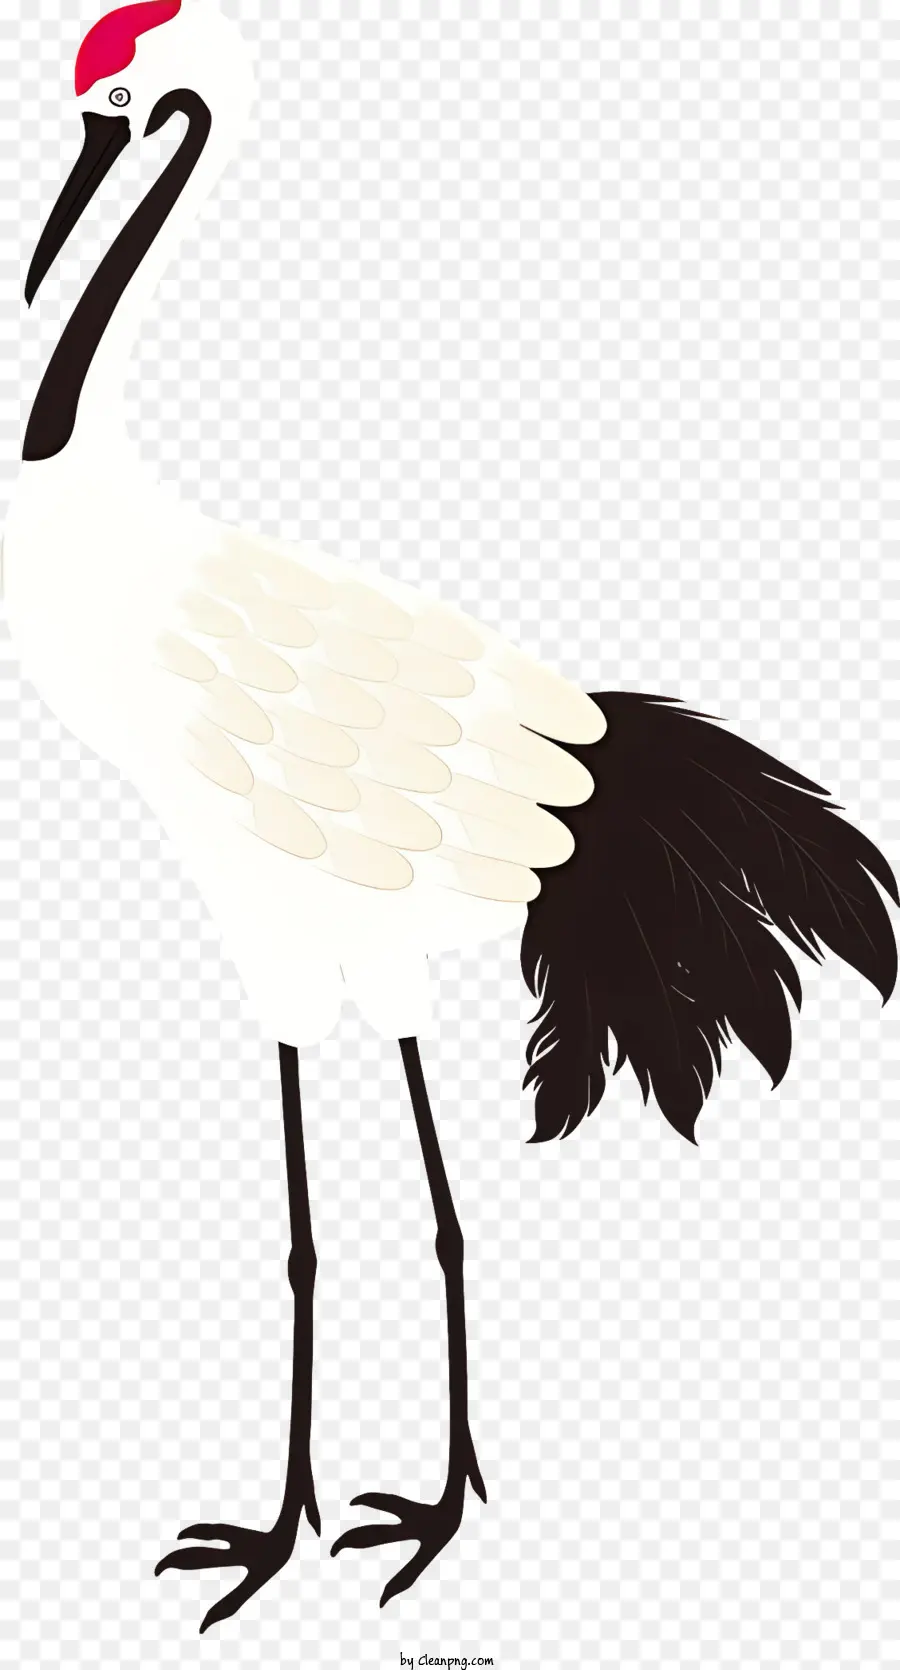 bird long beak black feathers thin body standing on legs